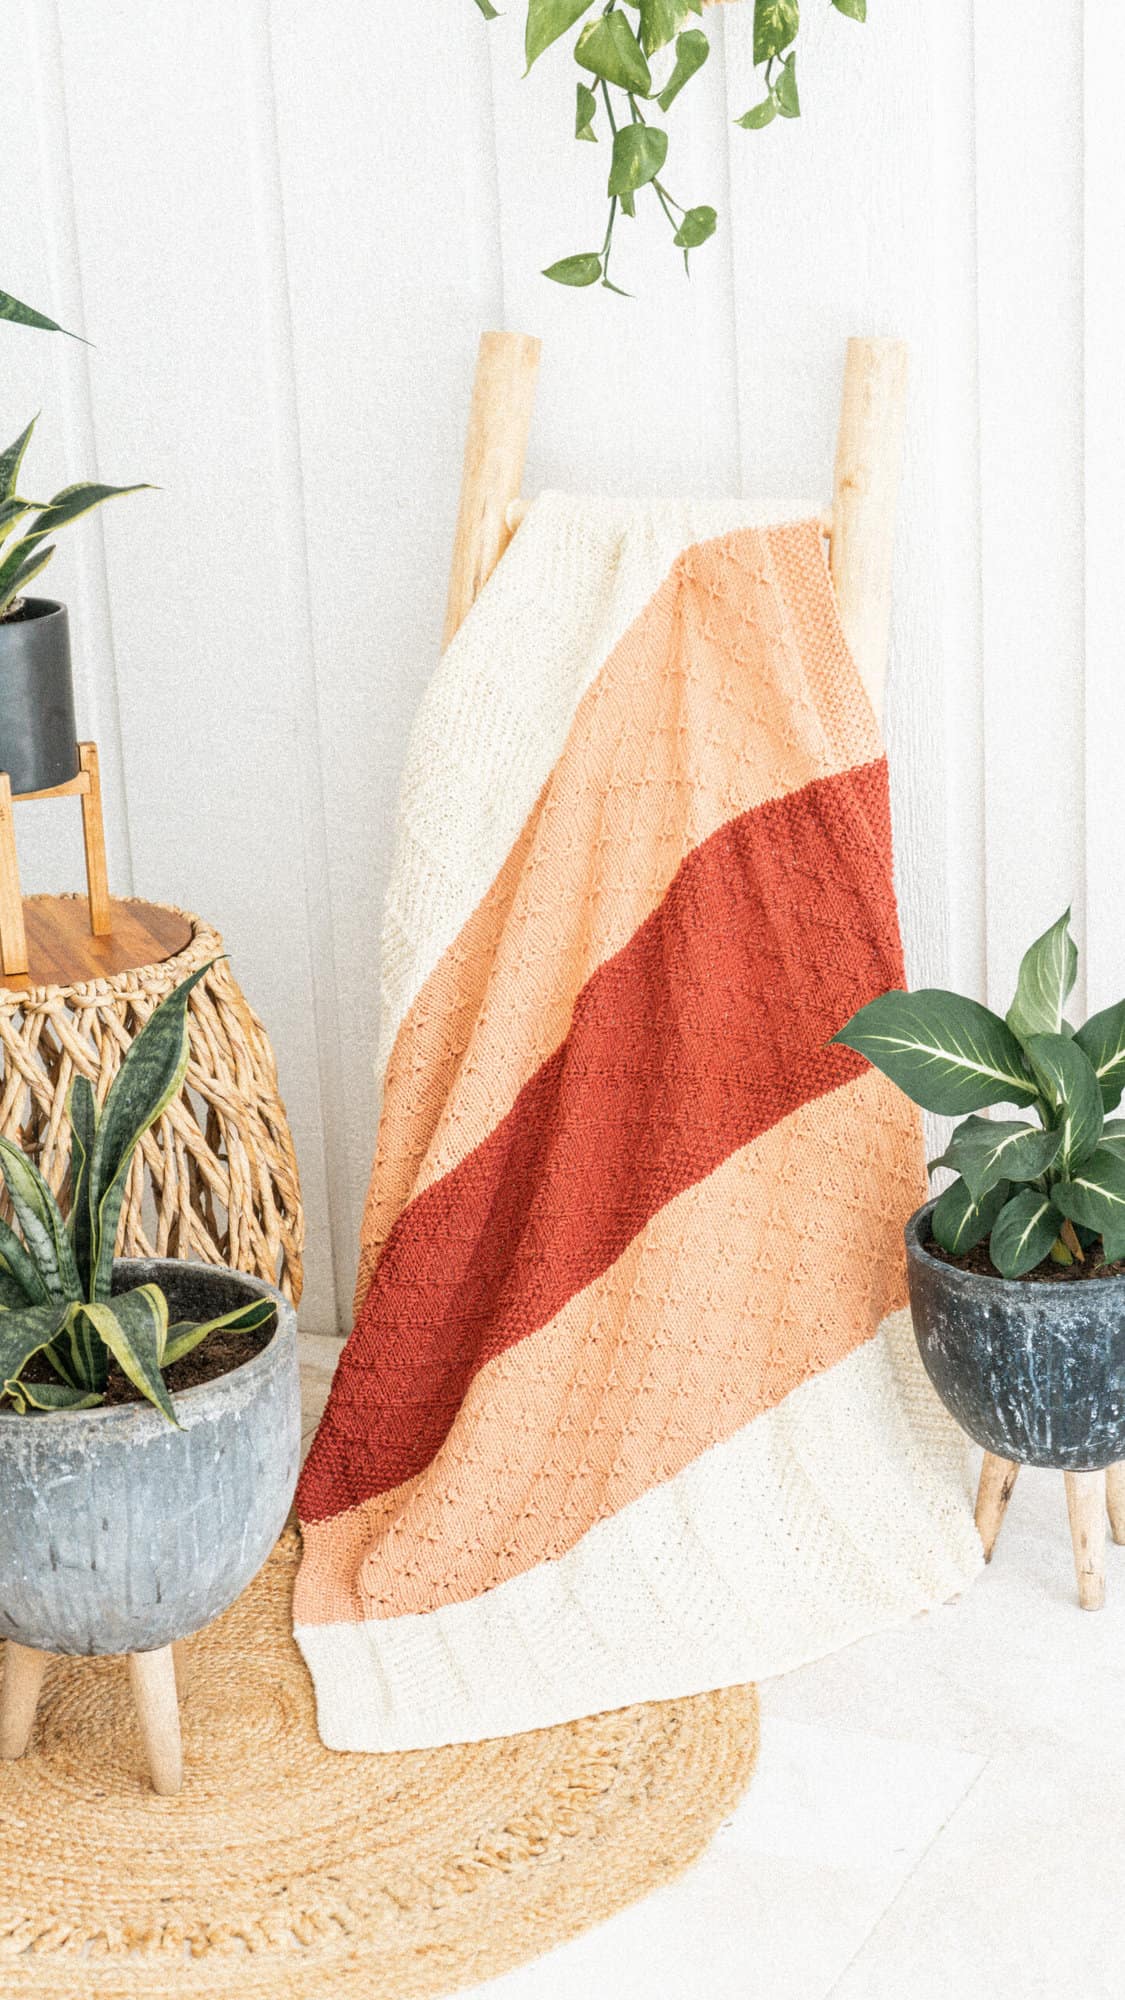 Knit Sampler Textured Blanket Free Pattern